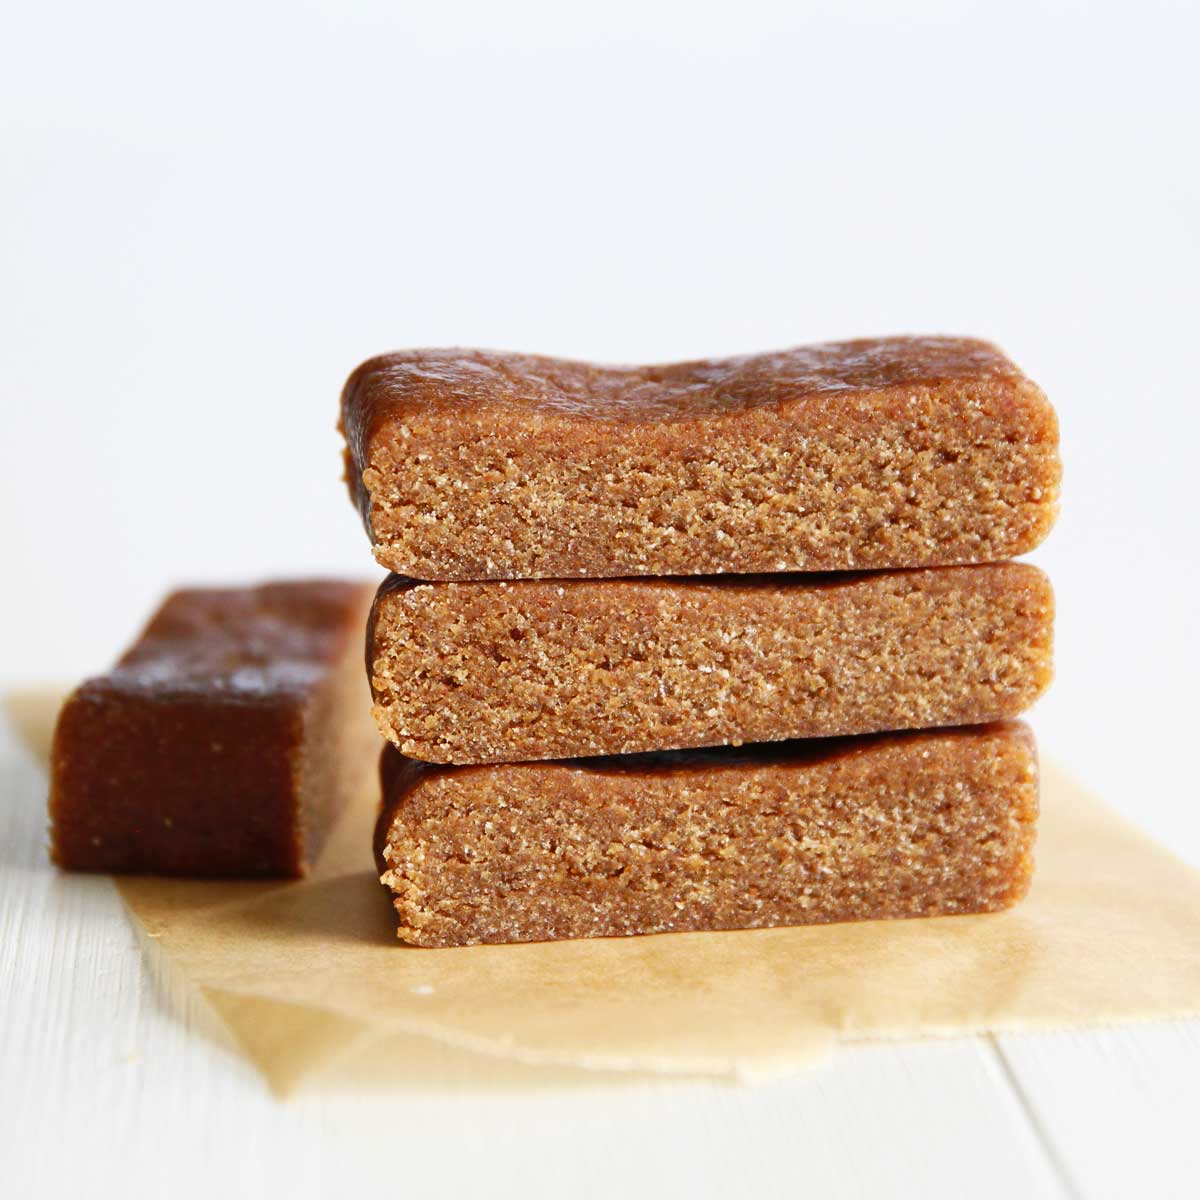 Gingerbread Collagen Protein Bars: a Healthier Festive Snack - Almond Joy Protein Bars